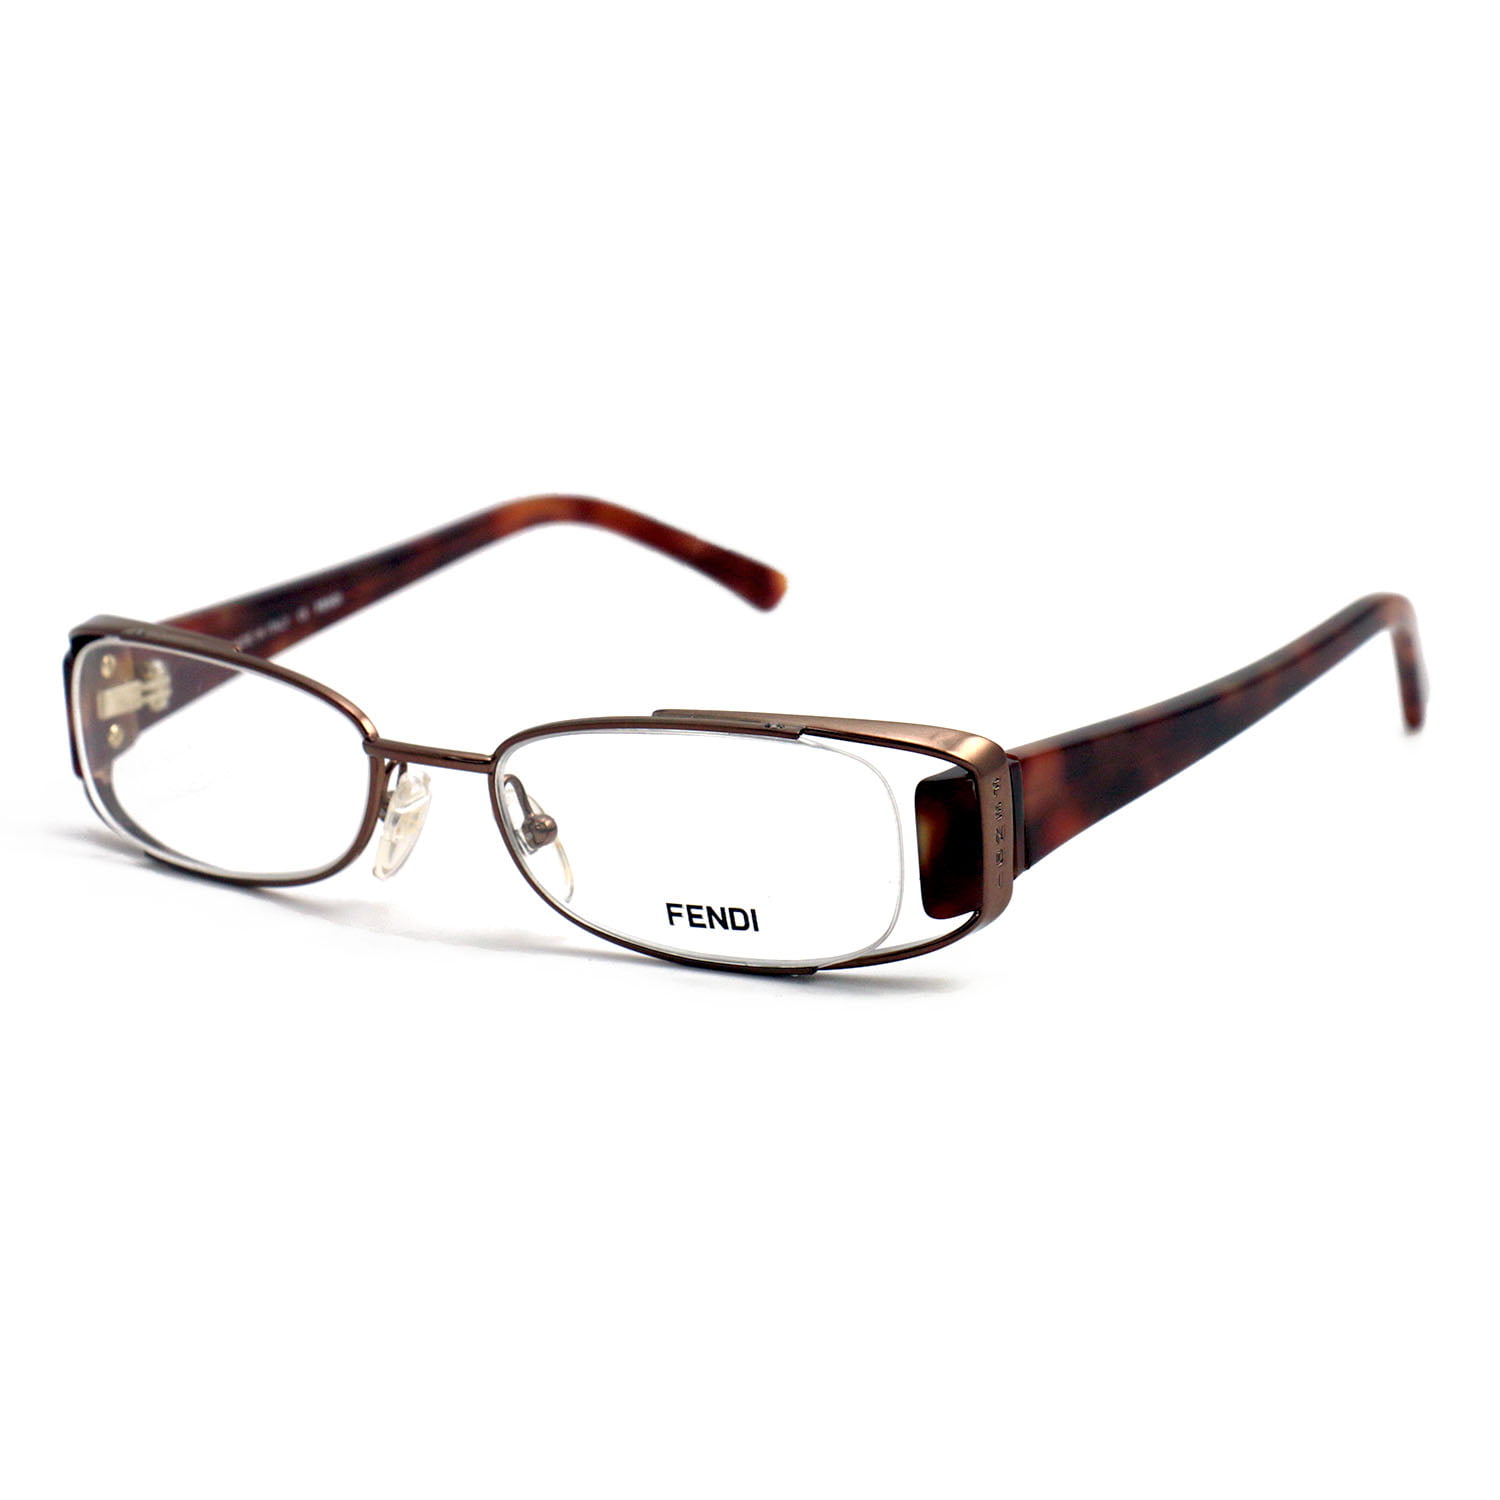 Fendi Eyeglasses Women Bronze Havana Frames Oval 52 17 135 F764 700